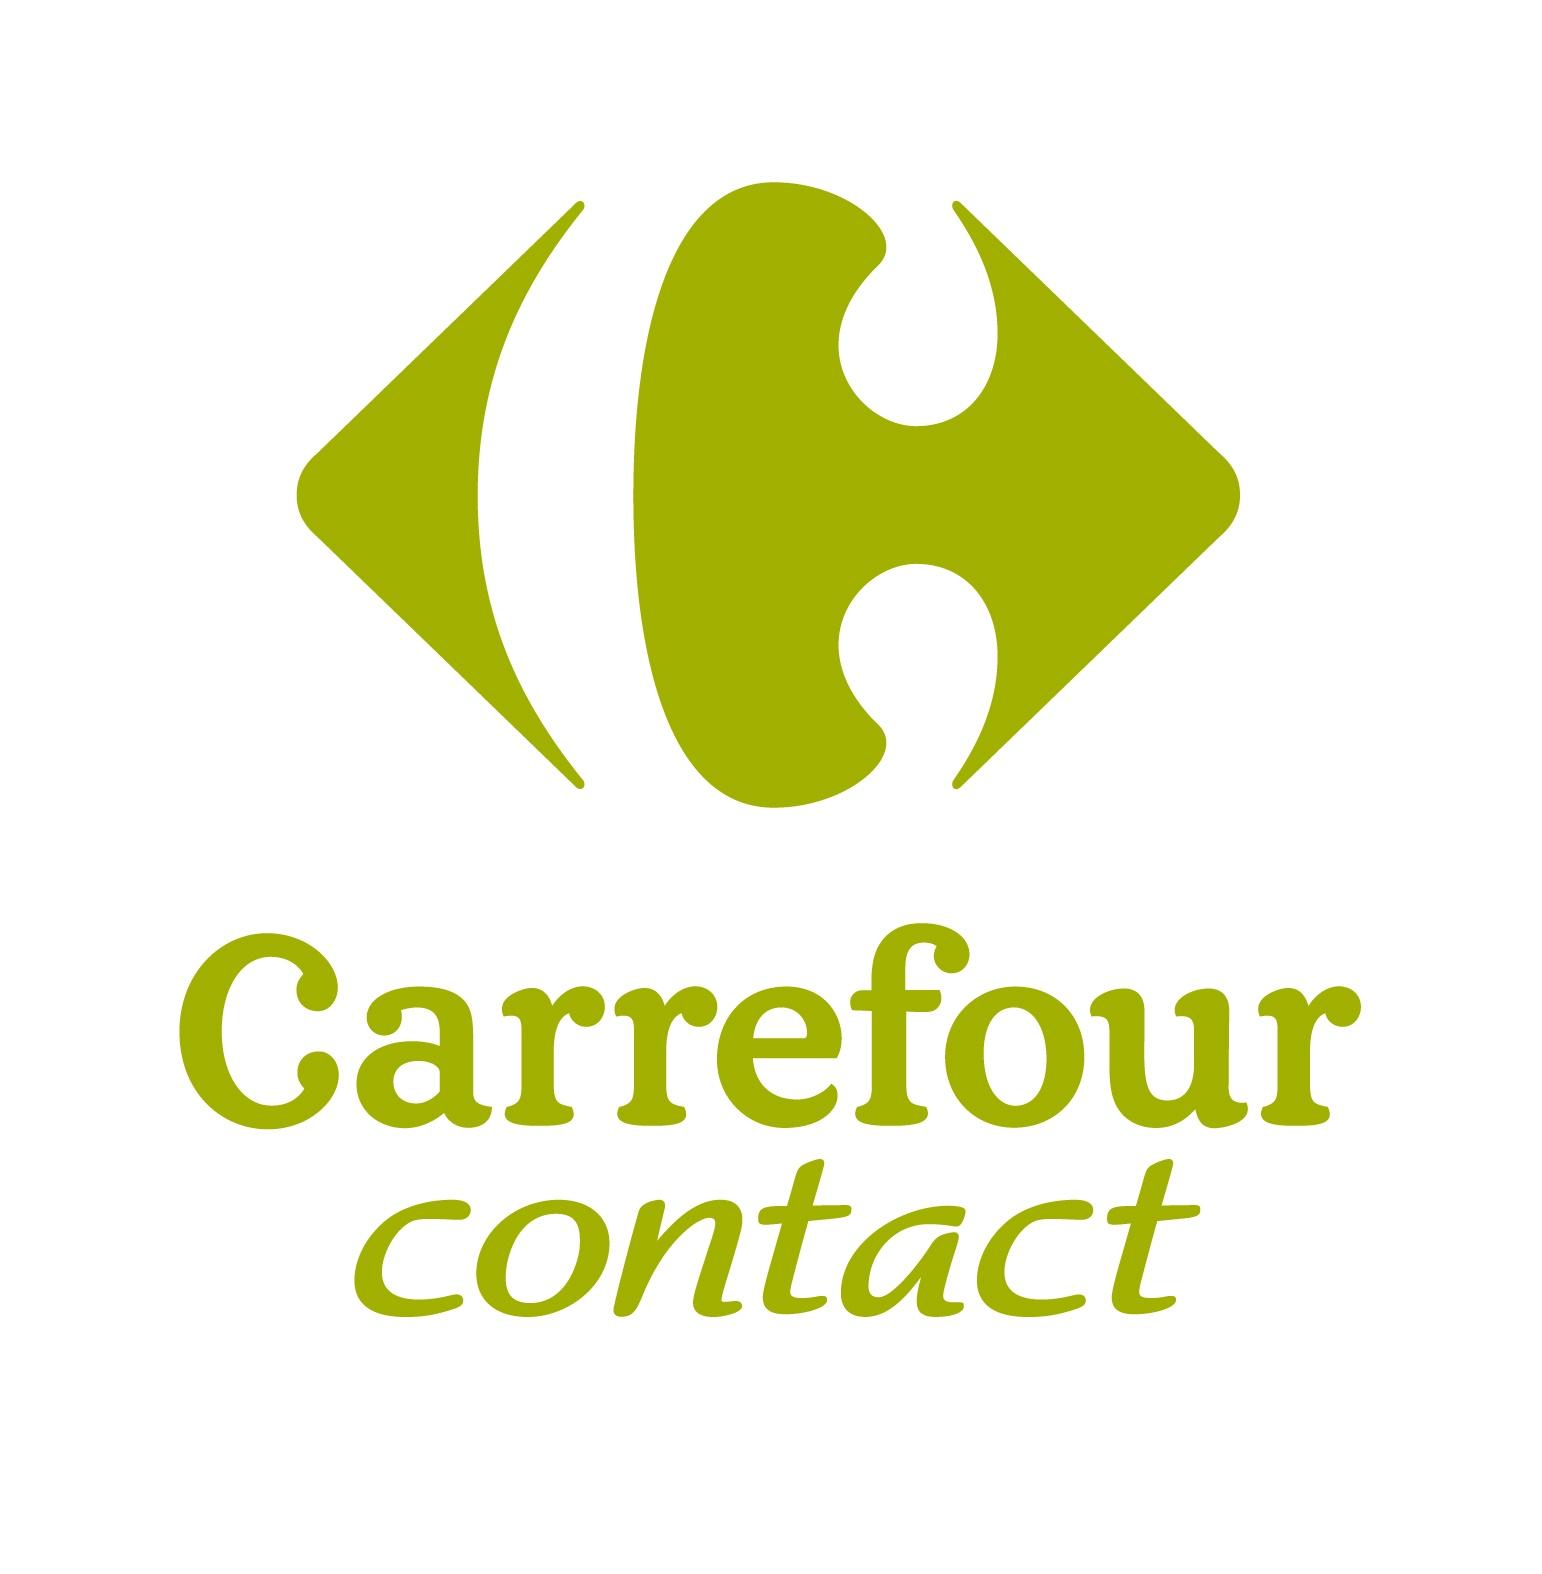 Carrefour Anvin